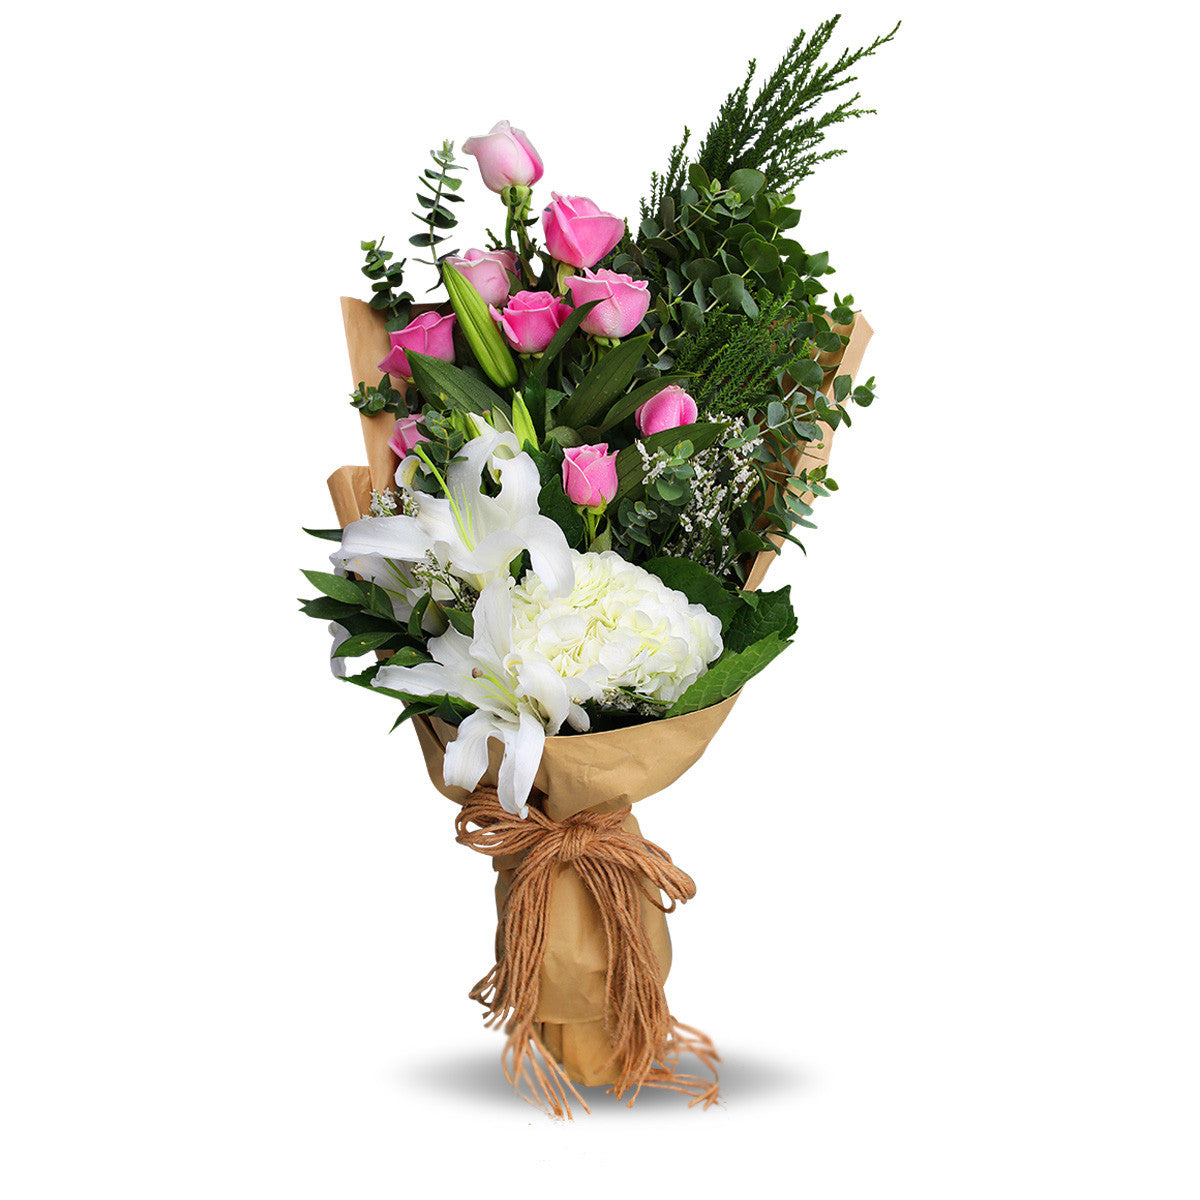 Gorgeous Bouquet Of Roses, Lilies And Decorative Leaves - April Flora